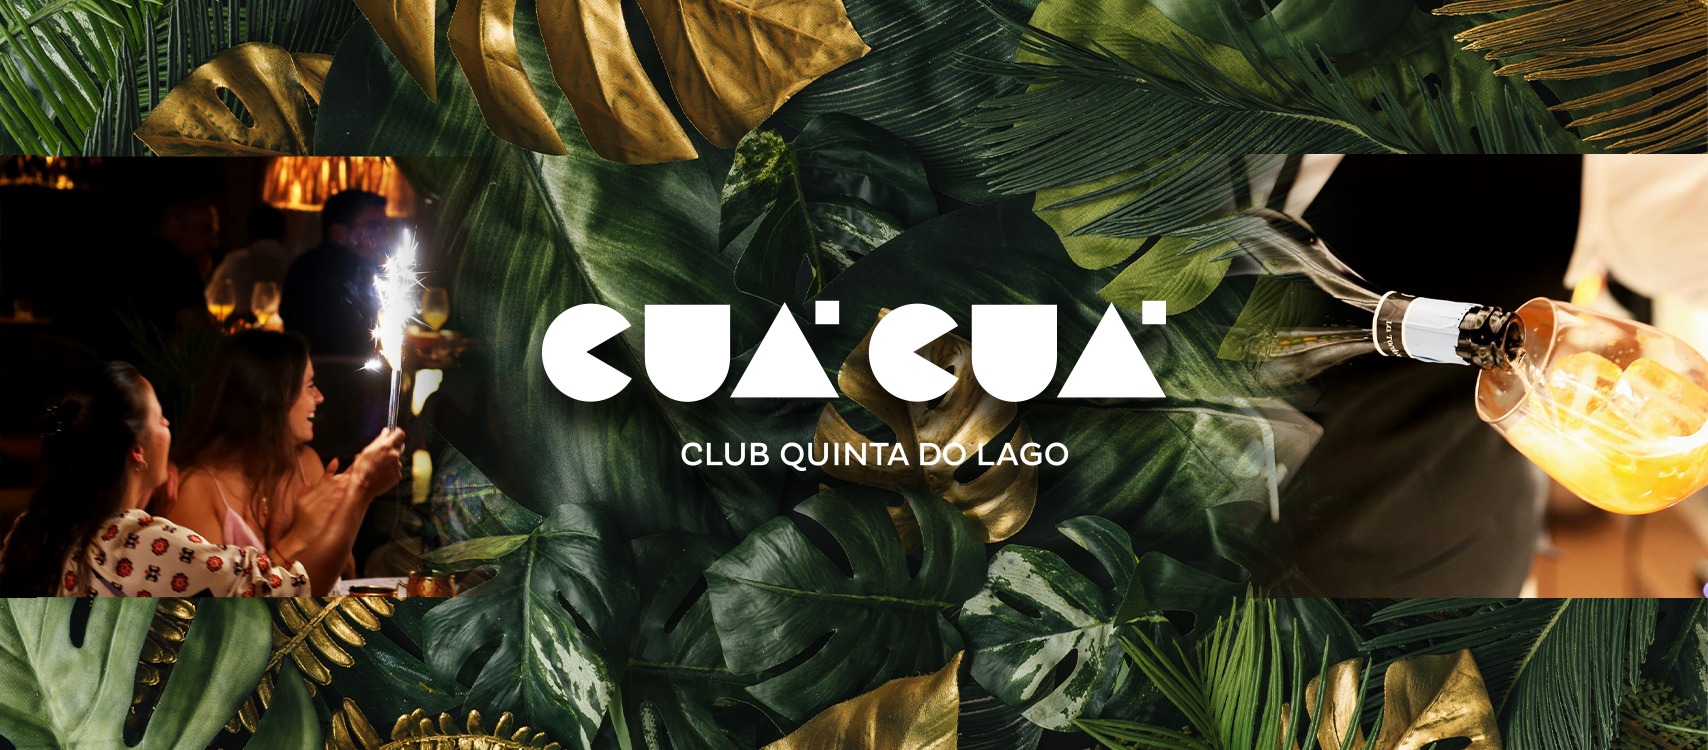 ESC Online patrocina concertos no Cuá Cuá Club na Quinta do Lago